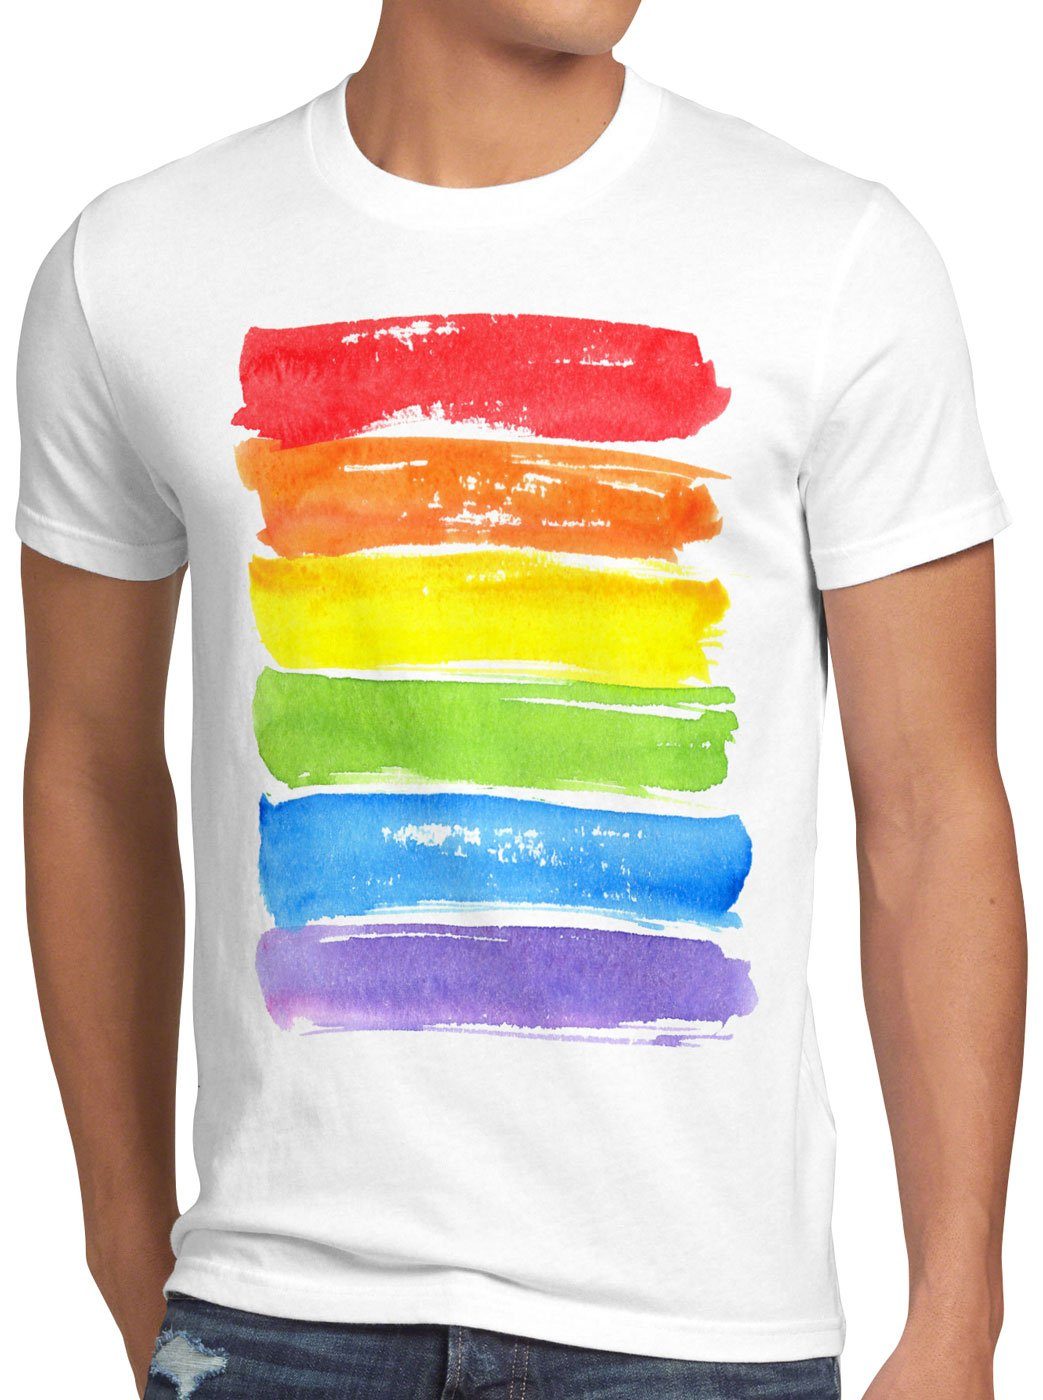 liebe style3 lgbt Print-Shirt toleranz Regenbogenflagge T-Shirt Herren